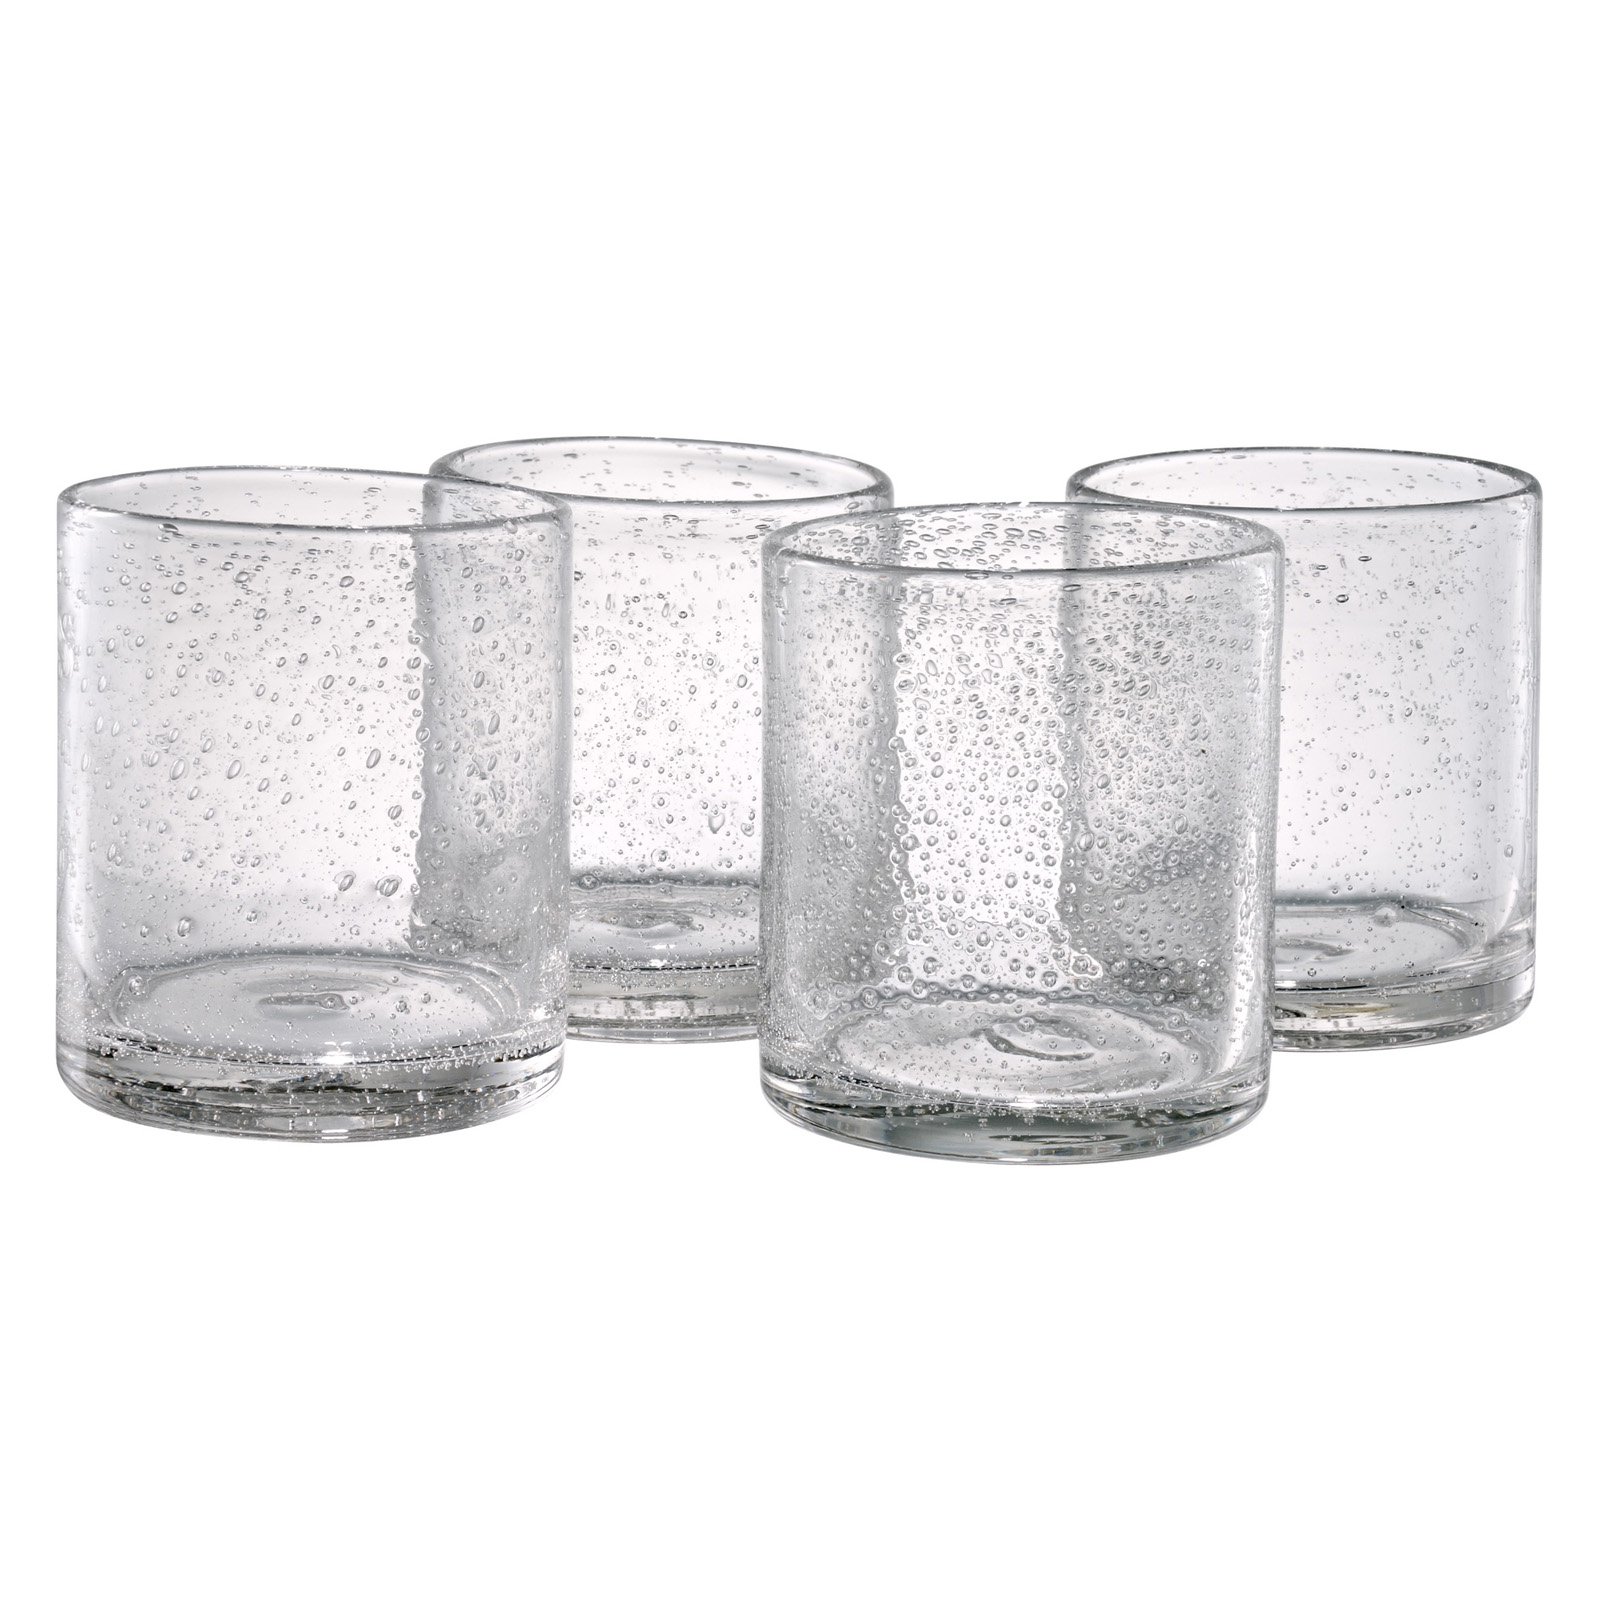 Artland Inc. Iris Bubble DOF Glasses - Set of 4 - image 1 of 7